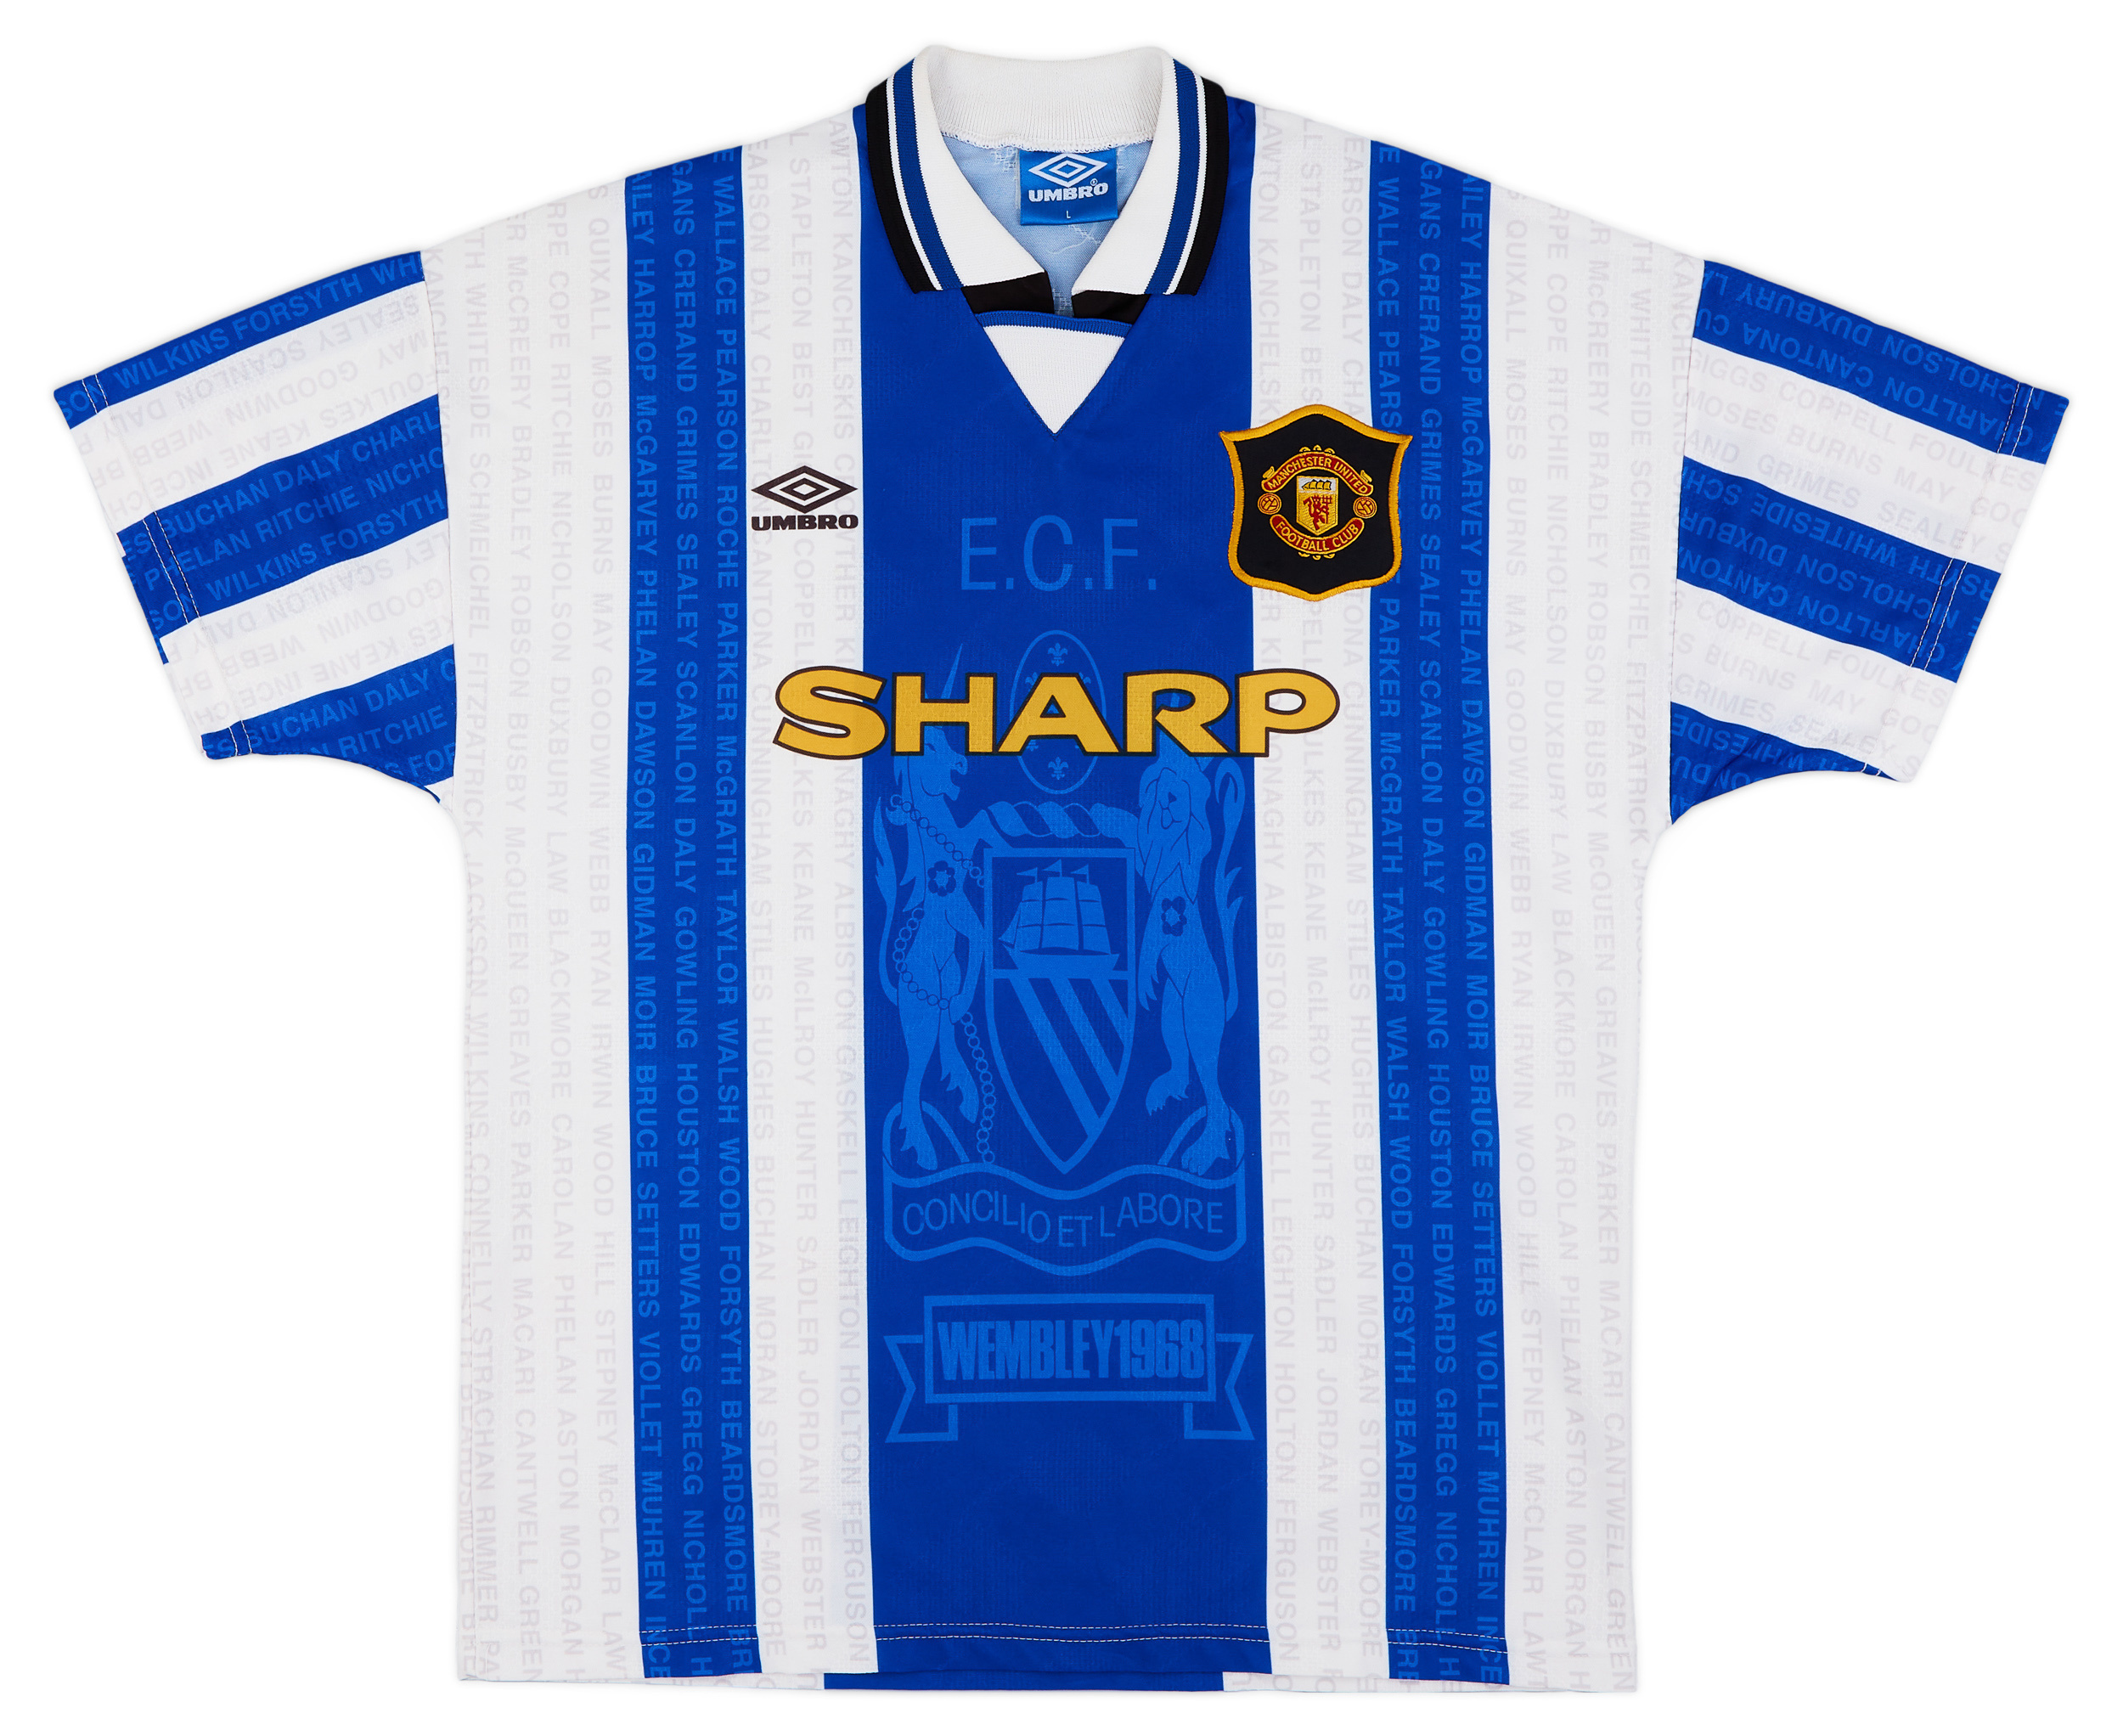 1994-96 Manchester United Third Shirt - Excellent 9/10 - ()